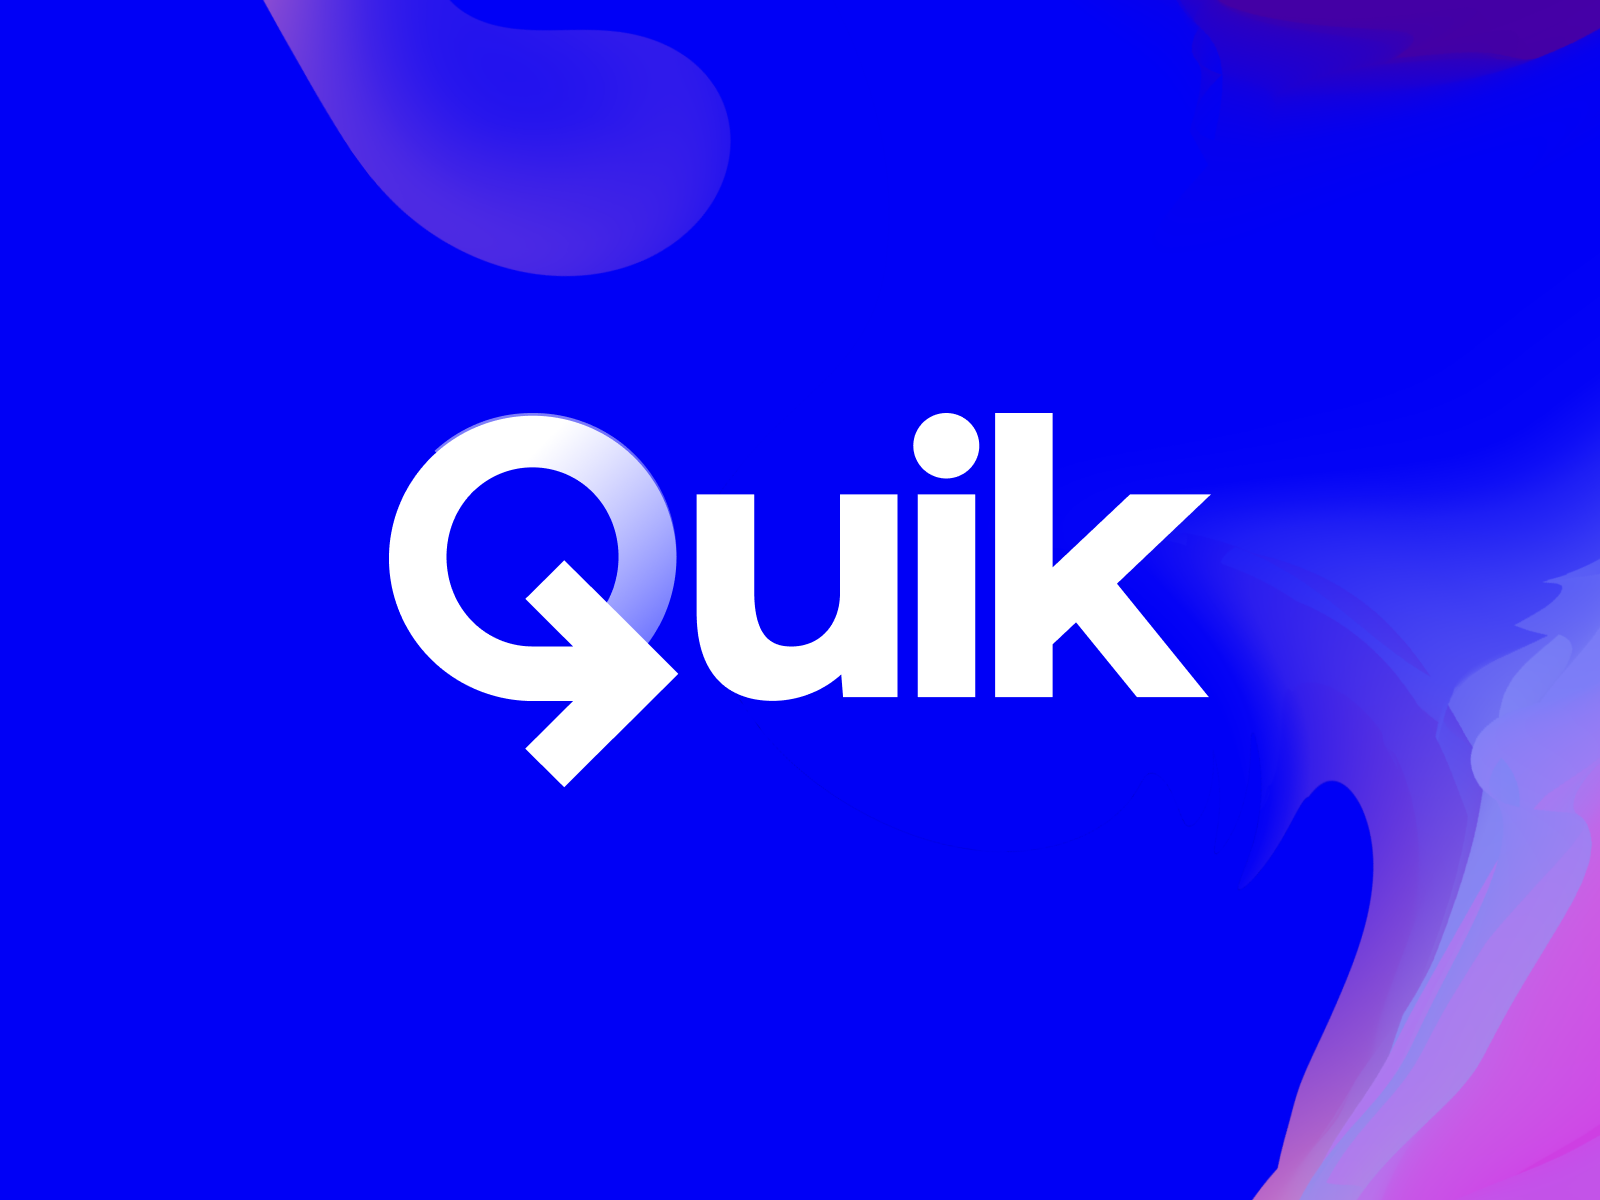 Quik Logo and Brand Identity